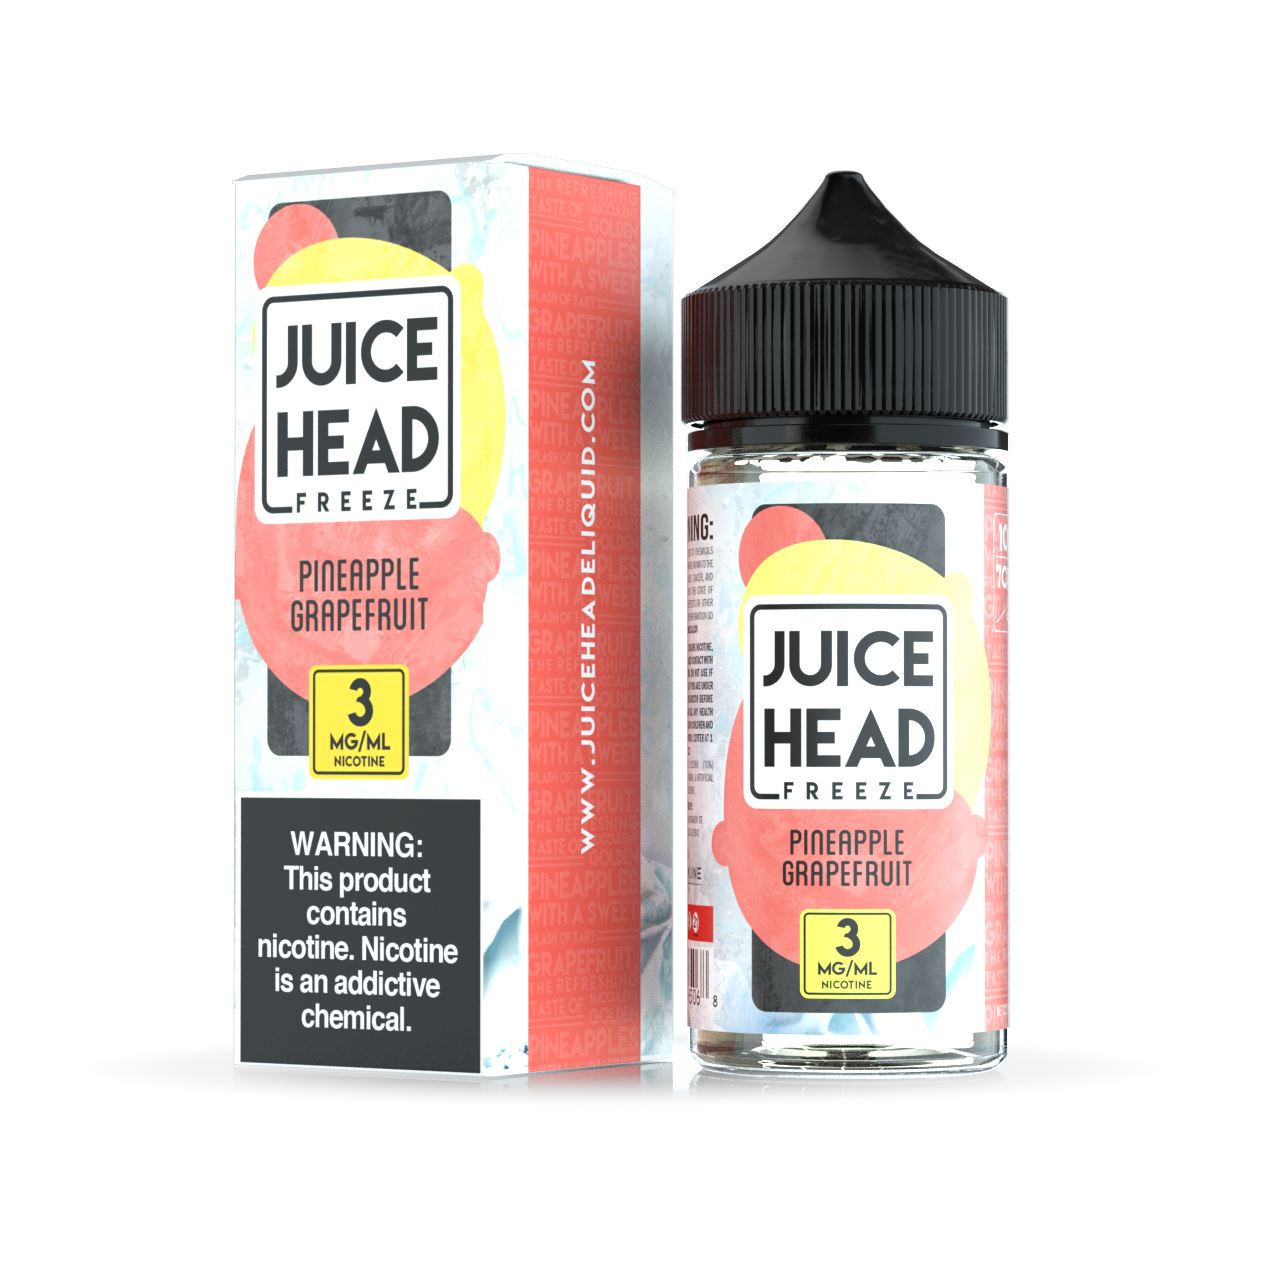 Juice Head Freeze - Pineapple Grapefruit - Vapoureyes